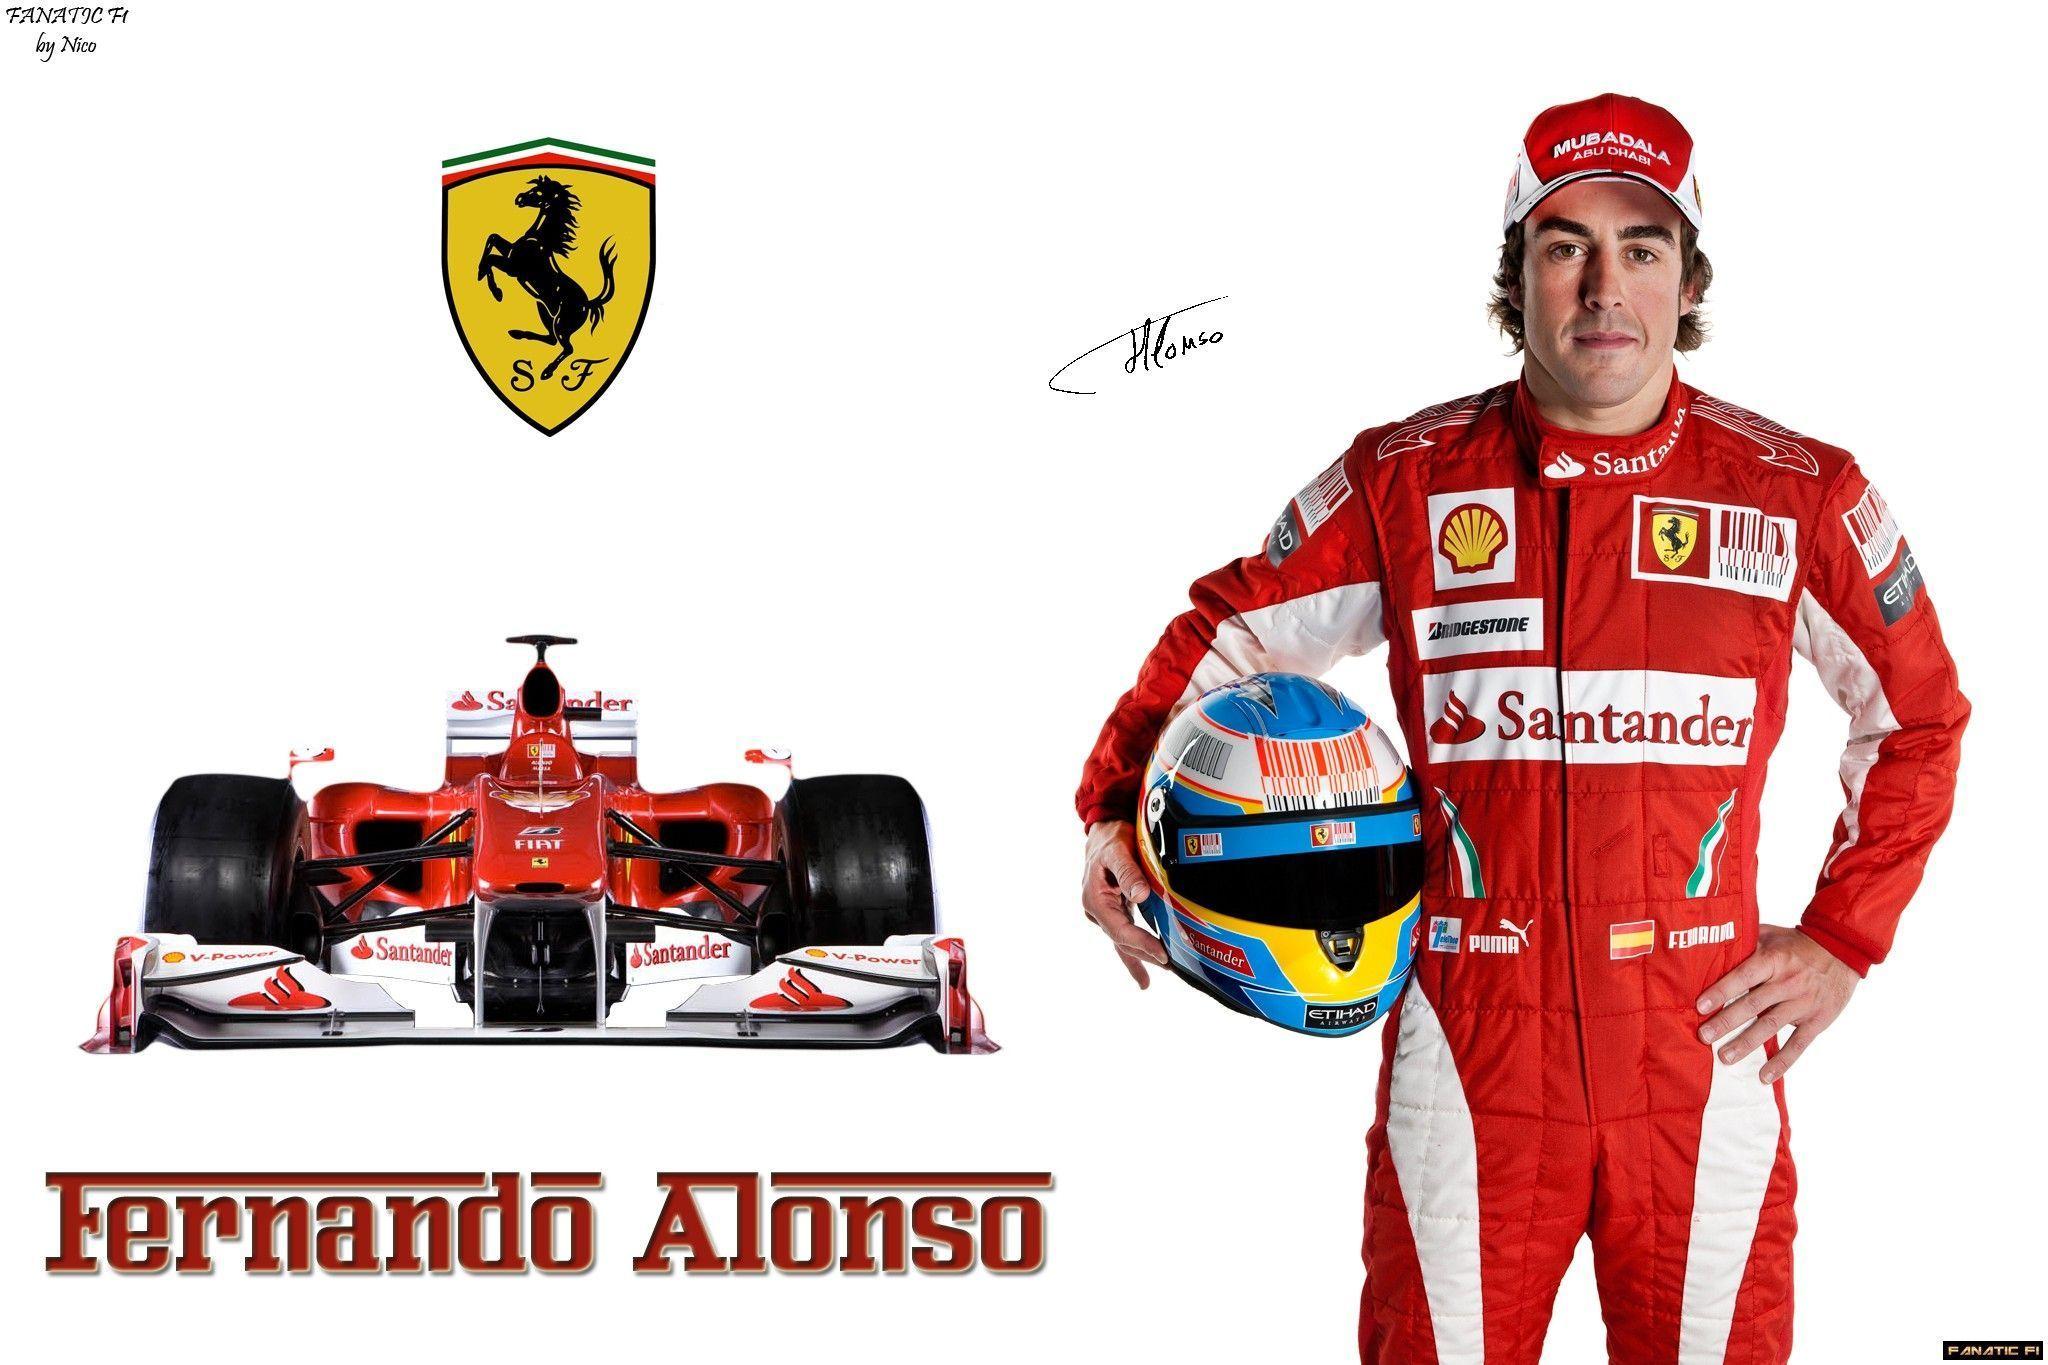 Fernando Alonso car wallpaper. High Quality Wallpaper, Wallpaper